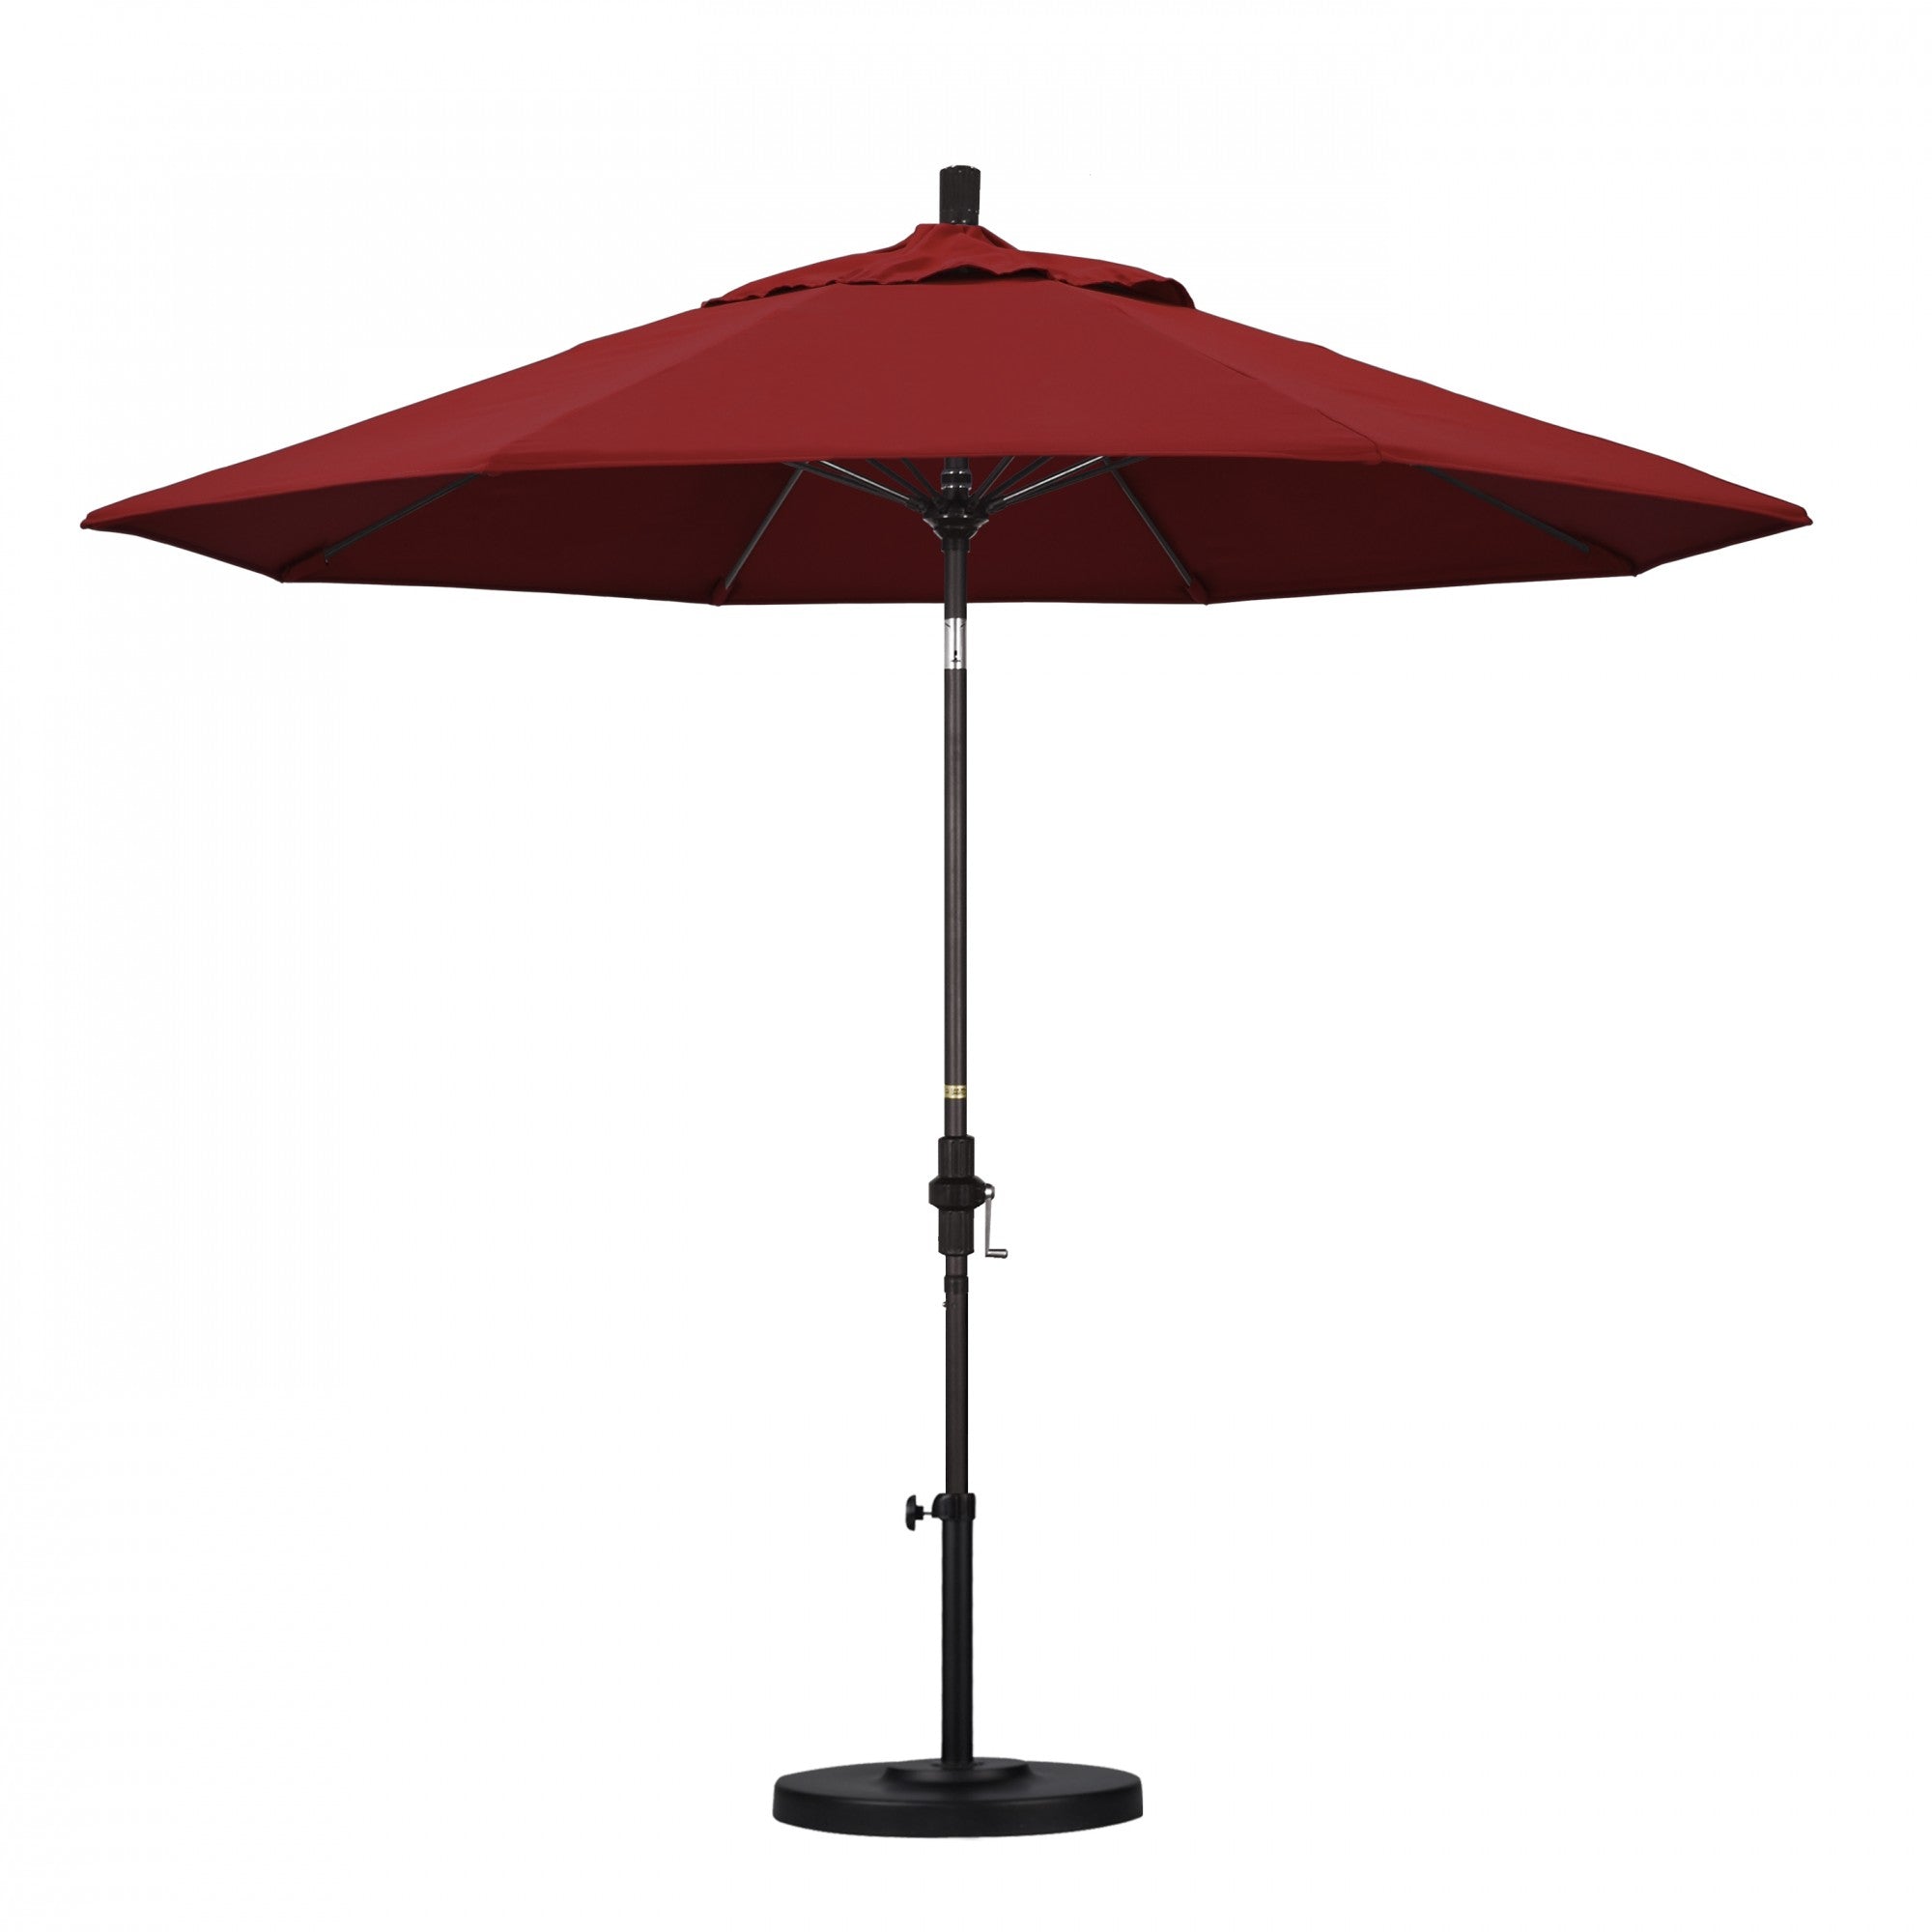 California Umbrella - 9' - Patio Umbrella Umbrella - Aluminum Pole - Red - Pacifica - GSCUF908117-SA03